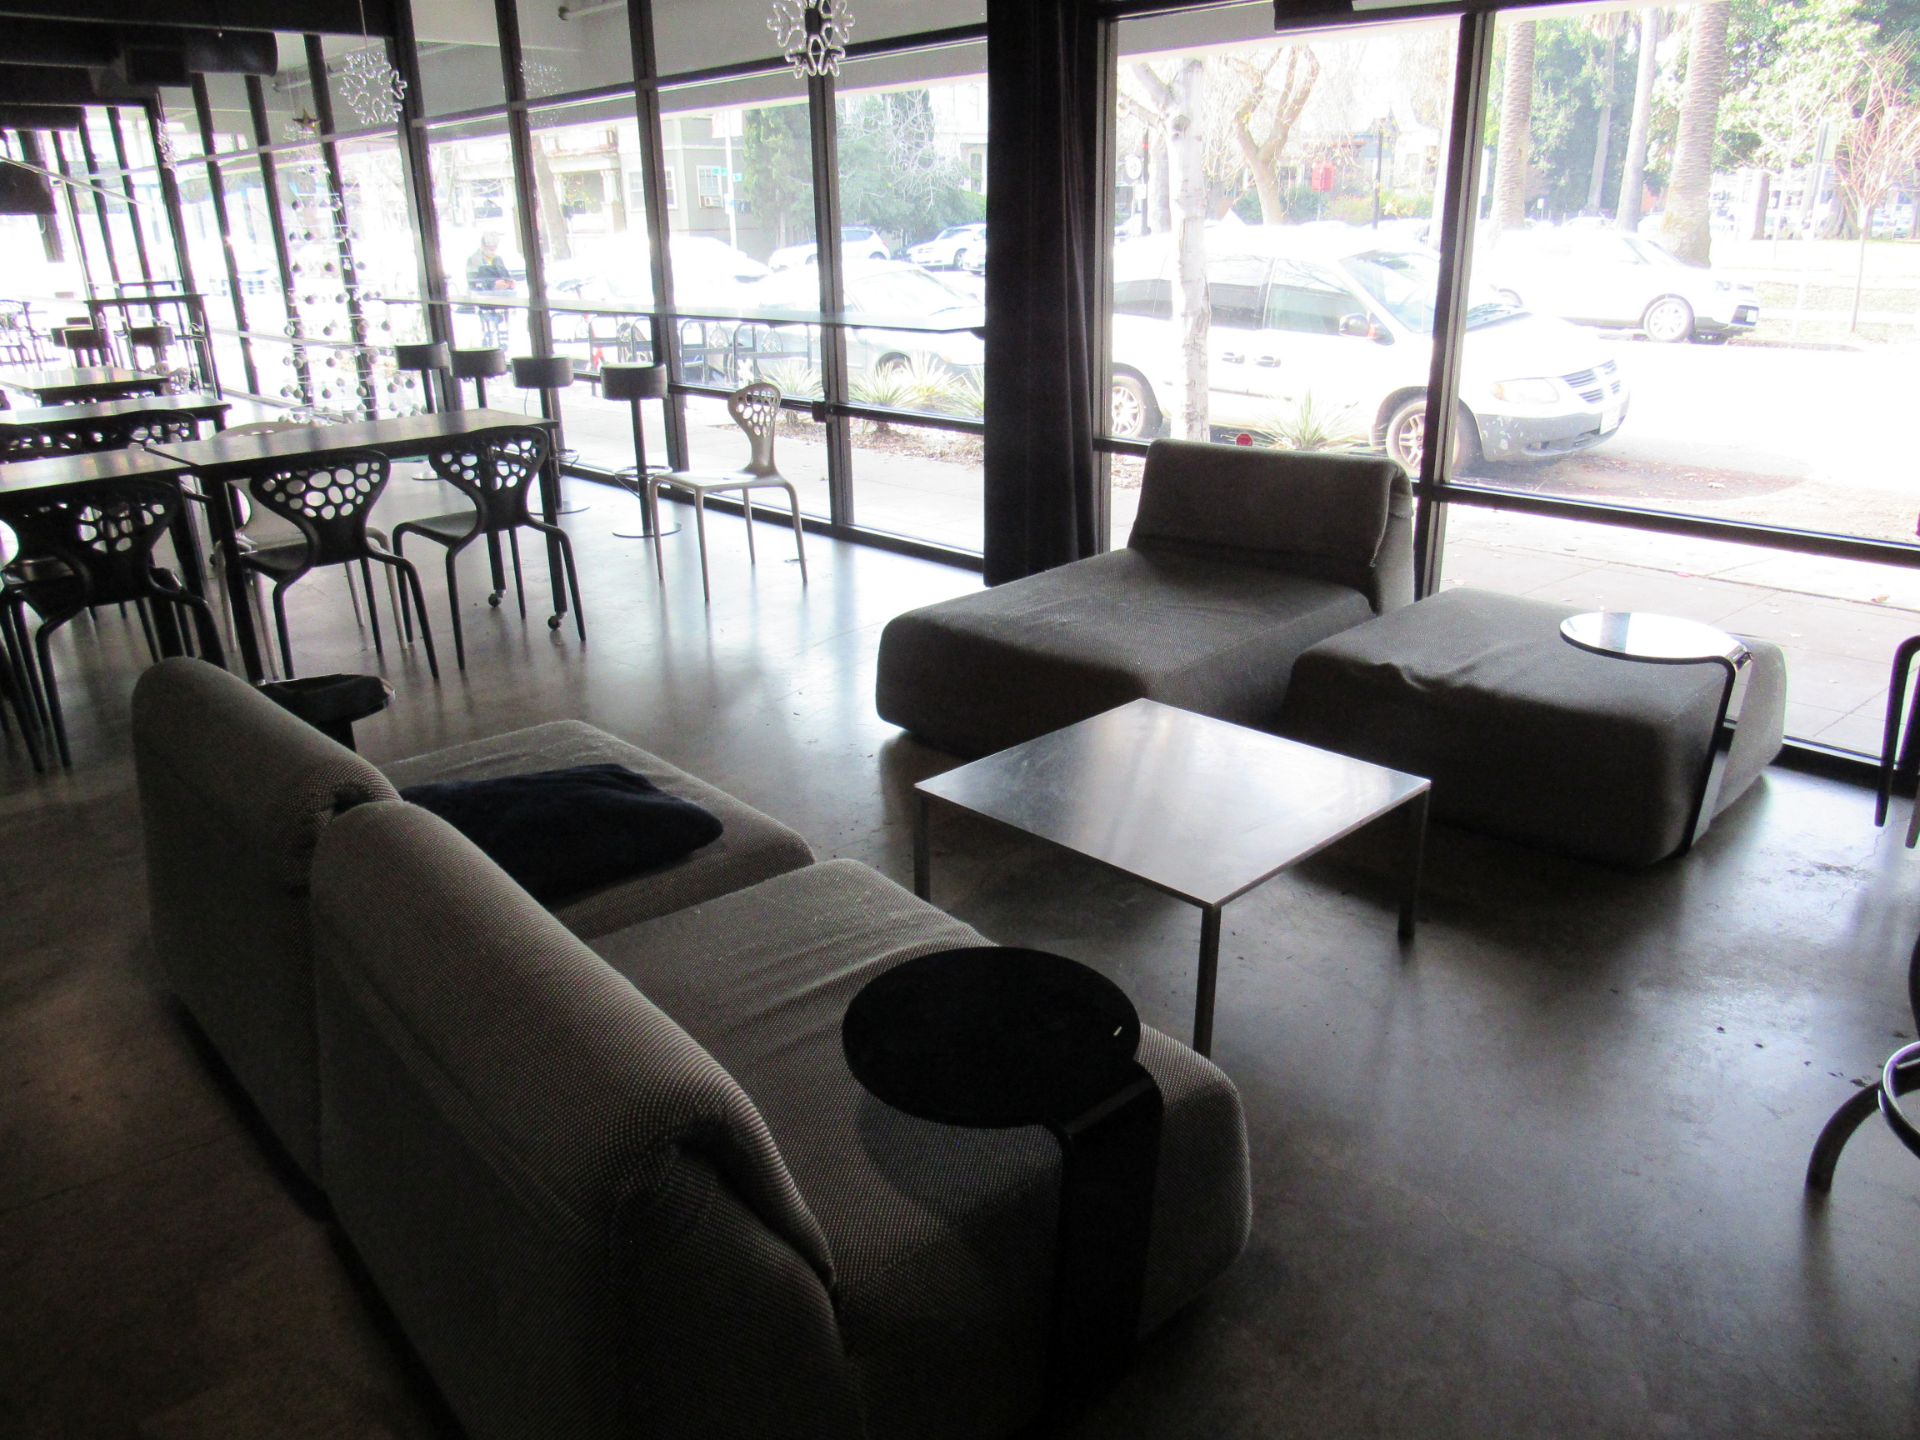 Lot 3 PC Sofa Lounge Chairs, 1-Ottoman & Coffee Table (Location Sacramento)